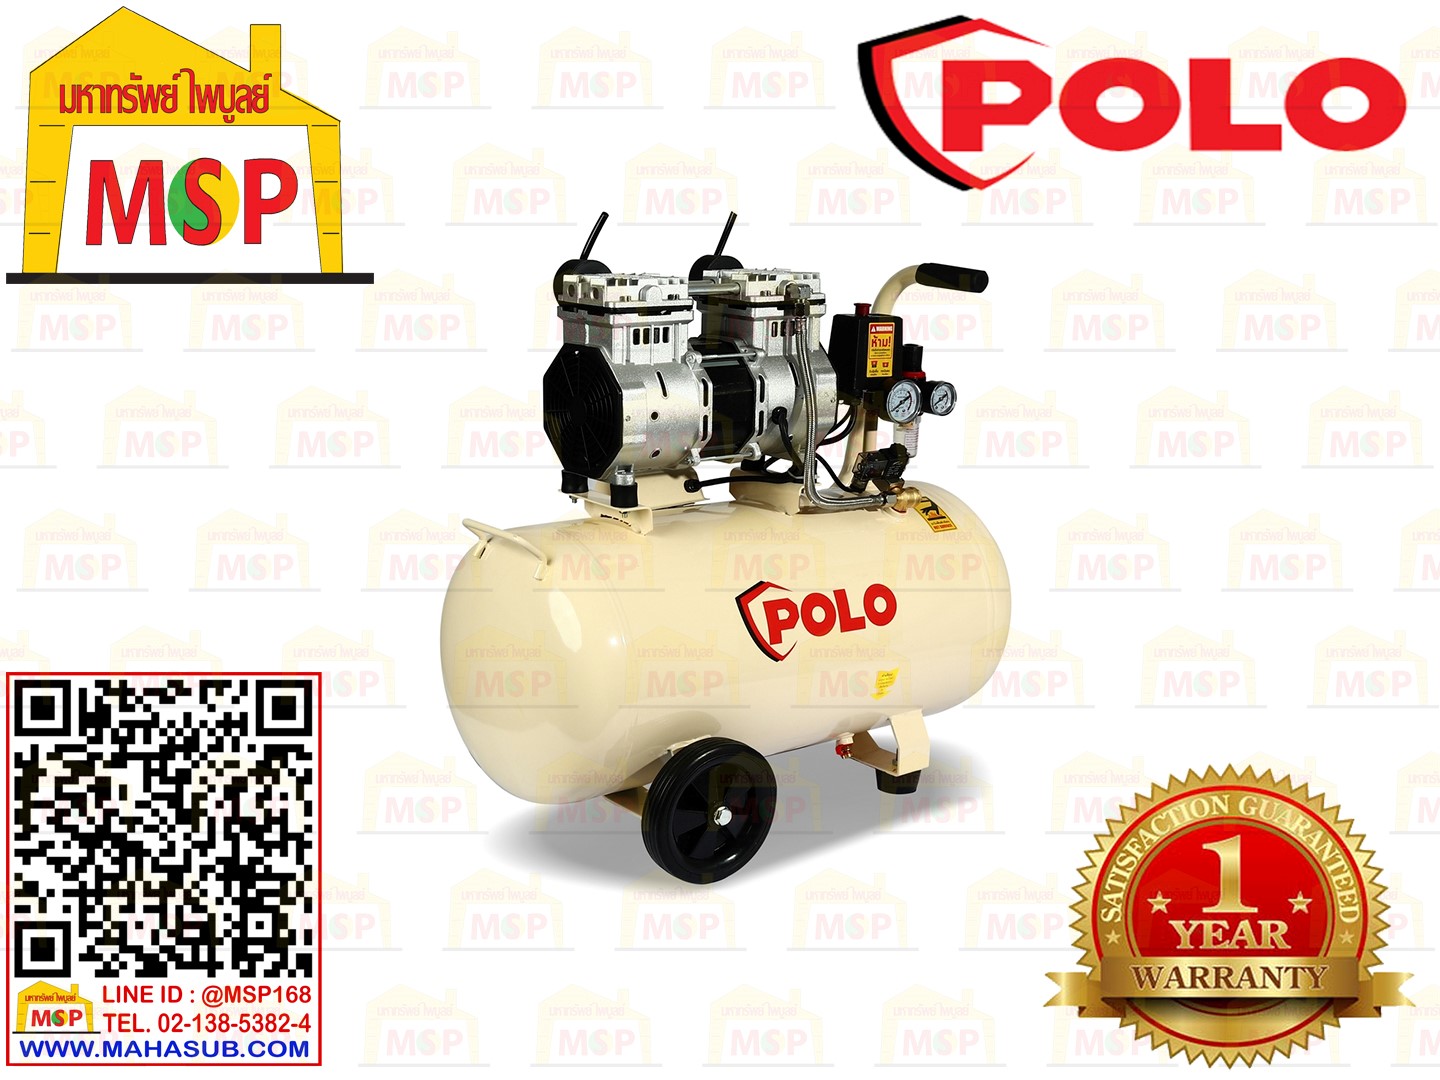 Polo ปั๊มลมออยล์ฟรี OFS-15001-50S  50L  1500W